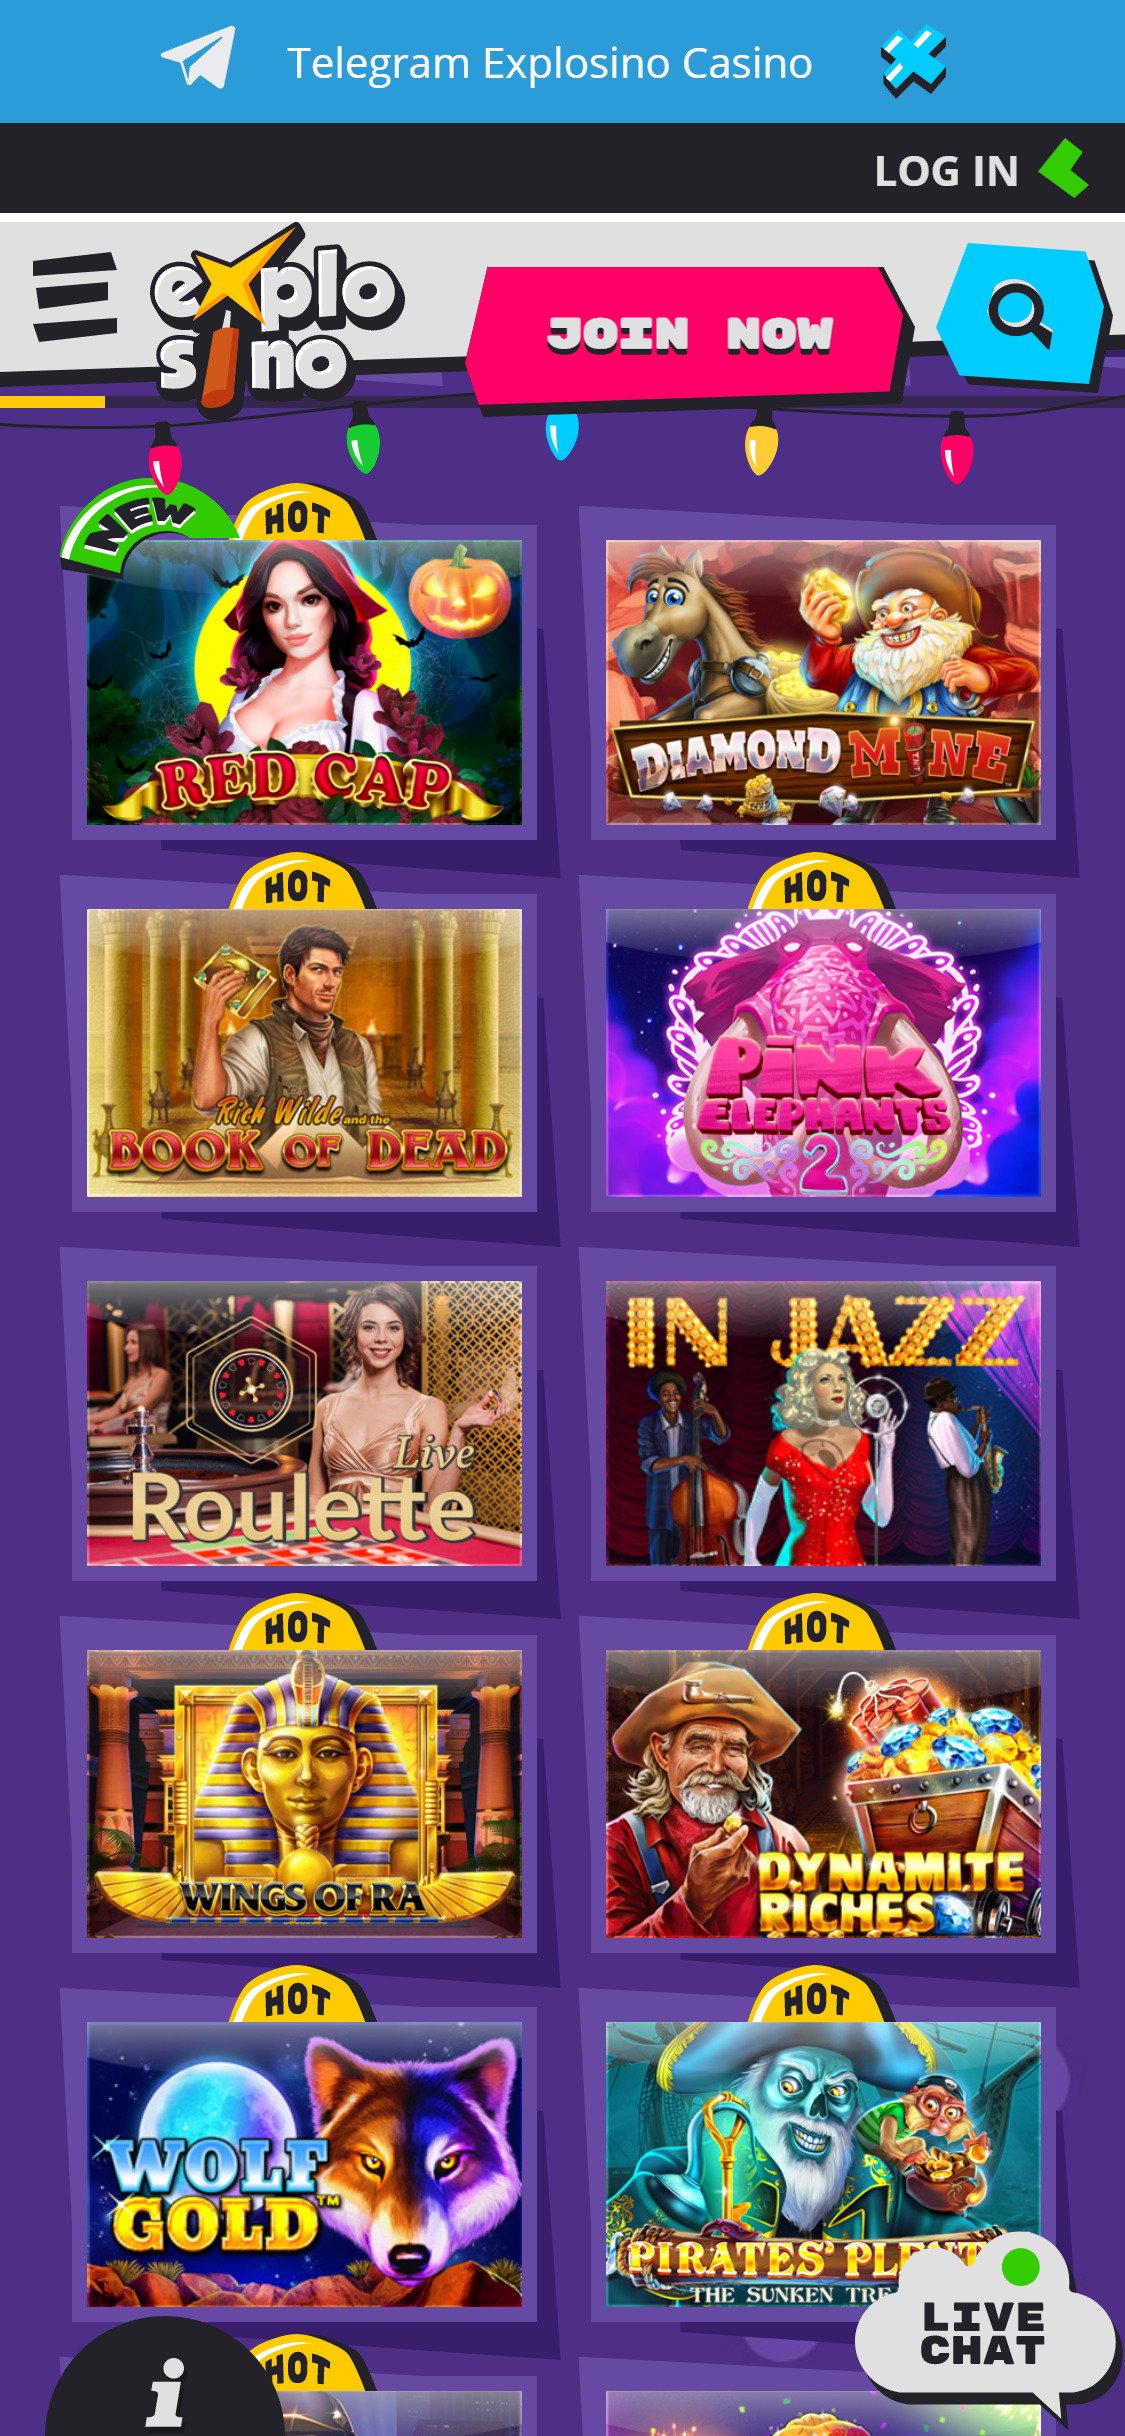 Explosino Casino Mobile Games Review